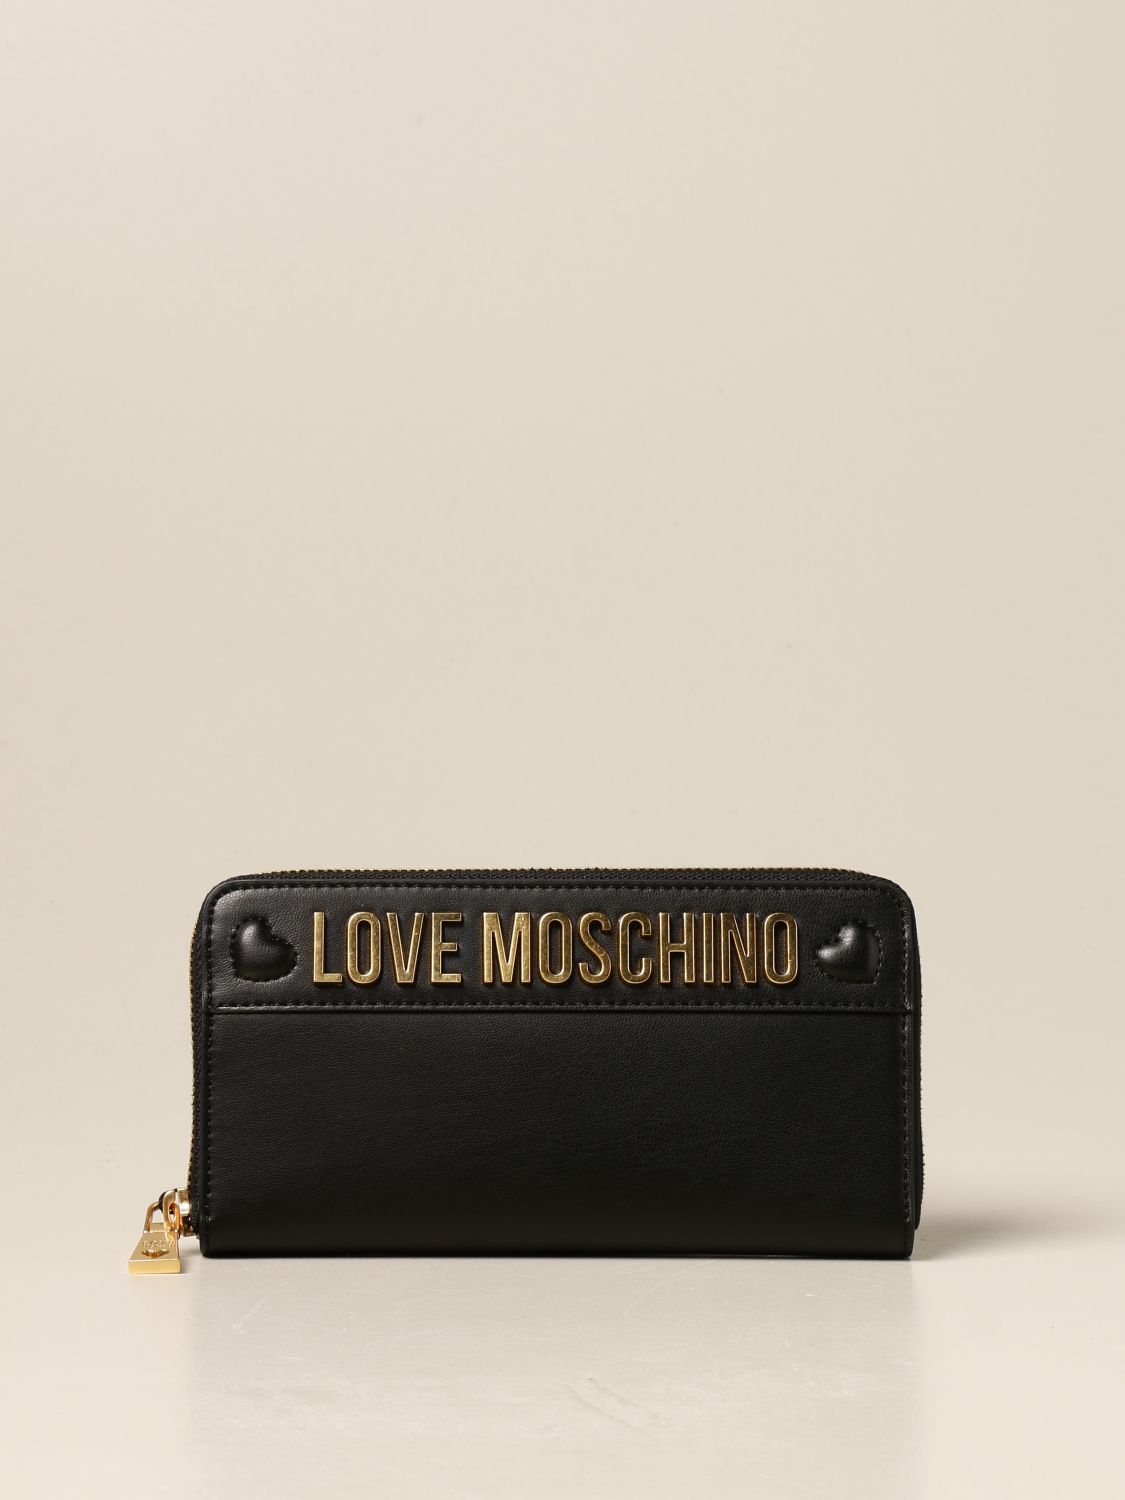 LOVE MOSCHINO: Wallet women | Wallet 